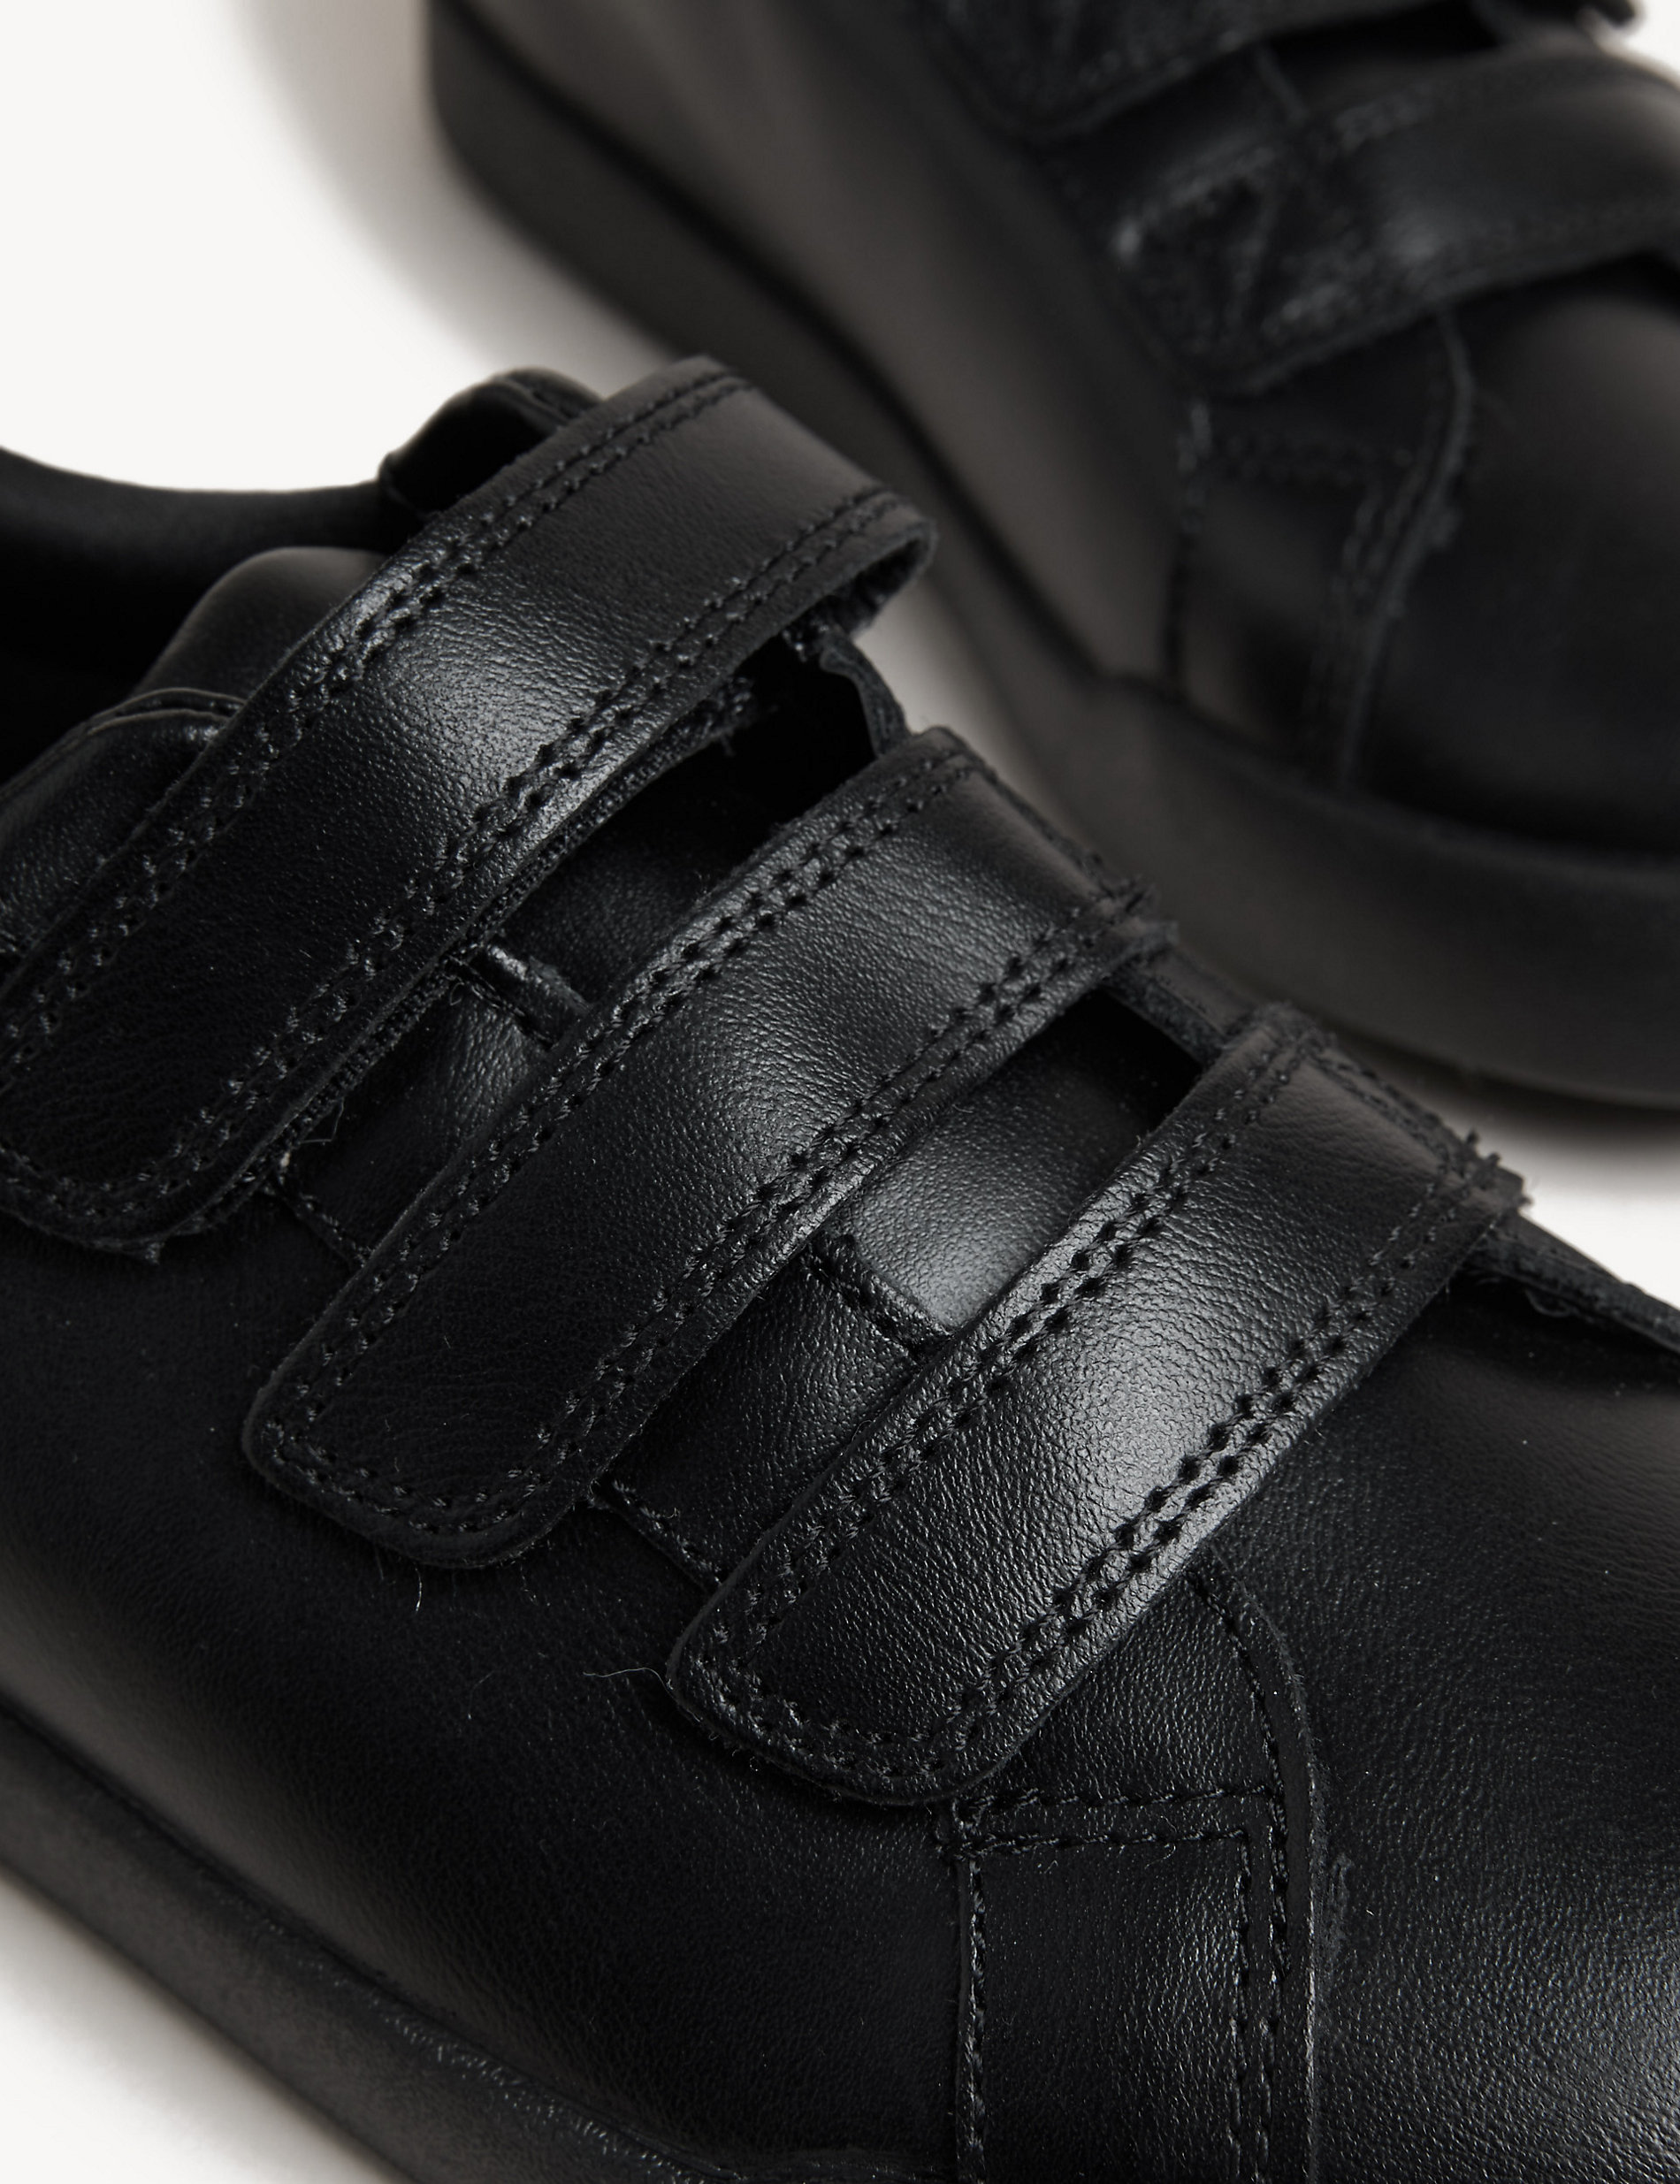 Kids' Leather Freshfeet™ School Shoes (2½ - 9 Large)